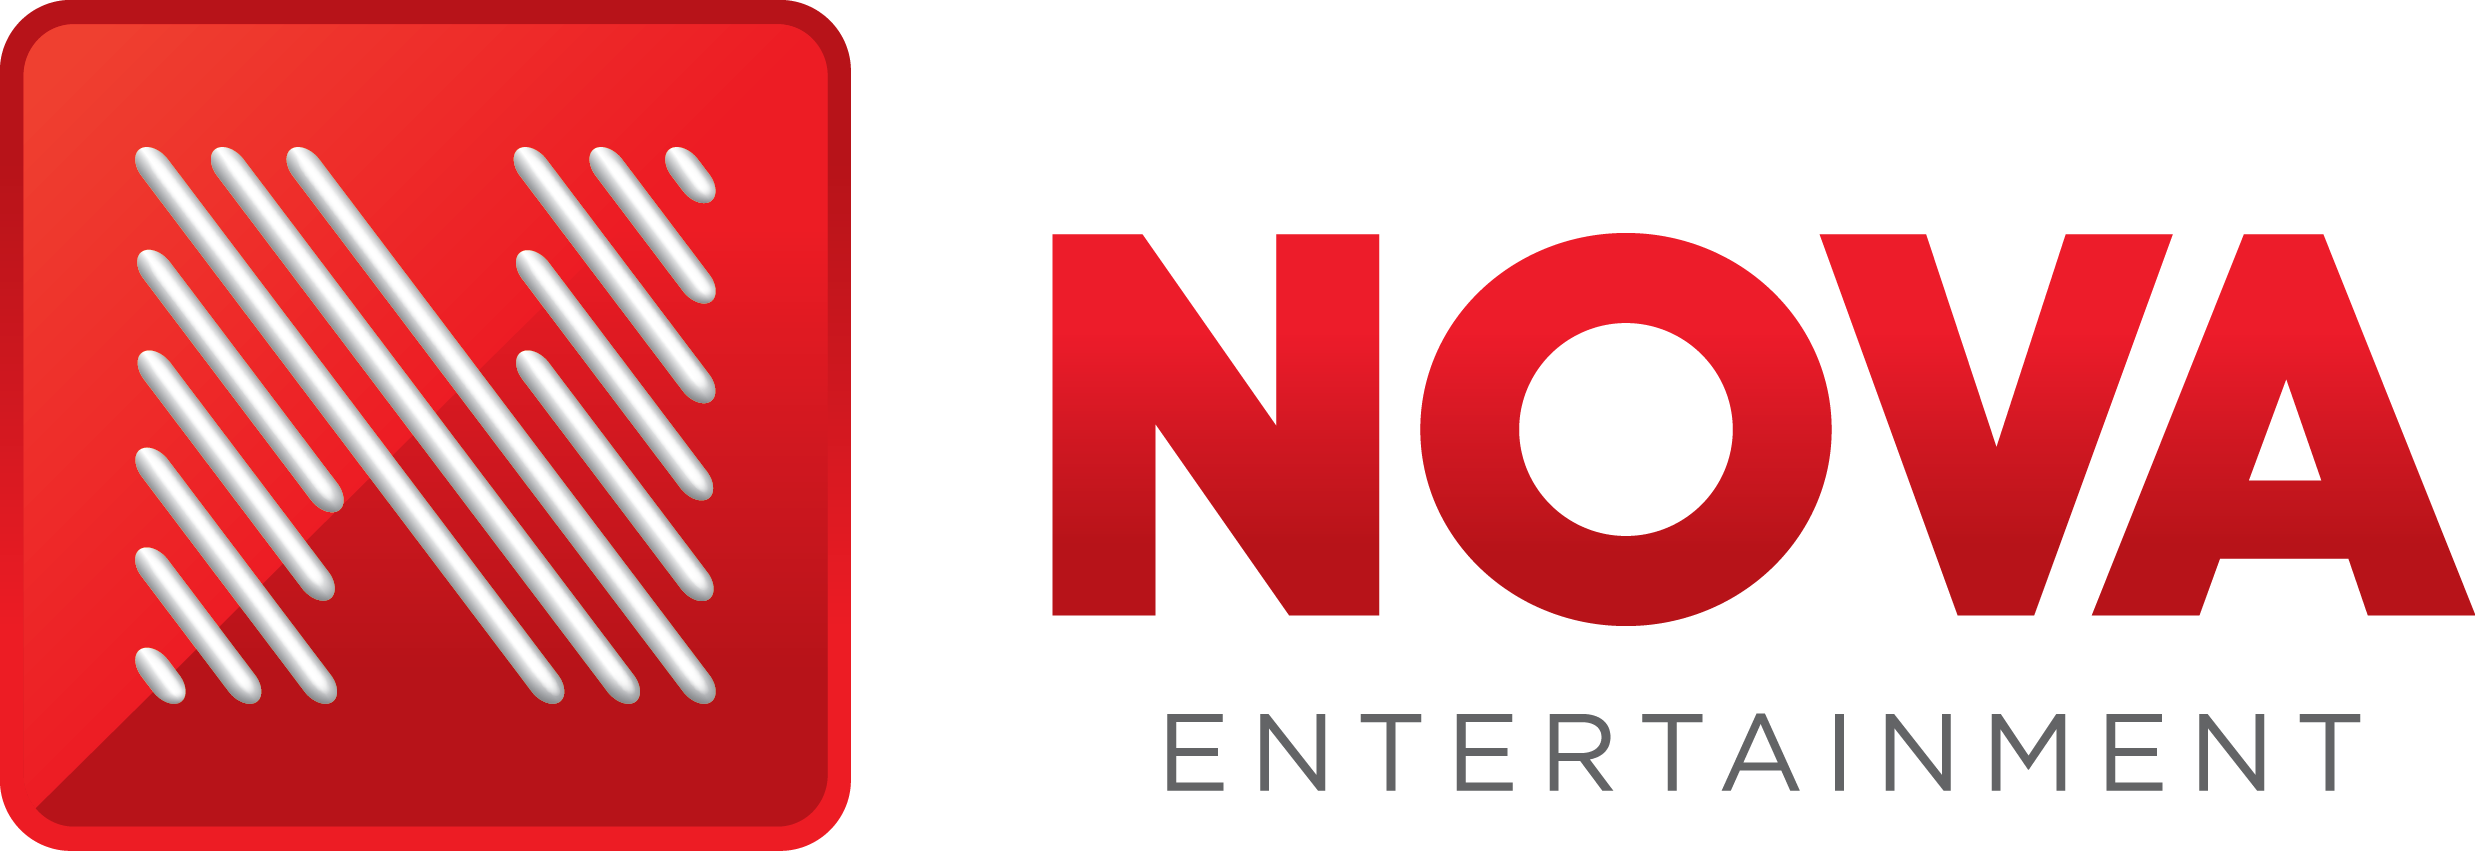 Nova Entertainment 